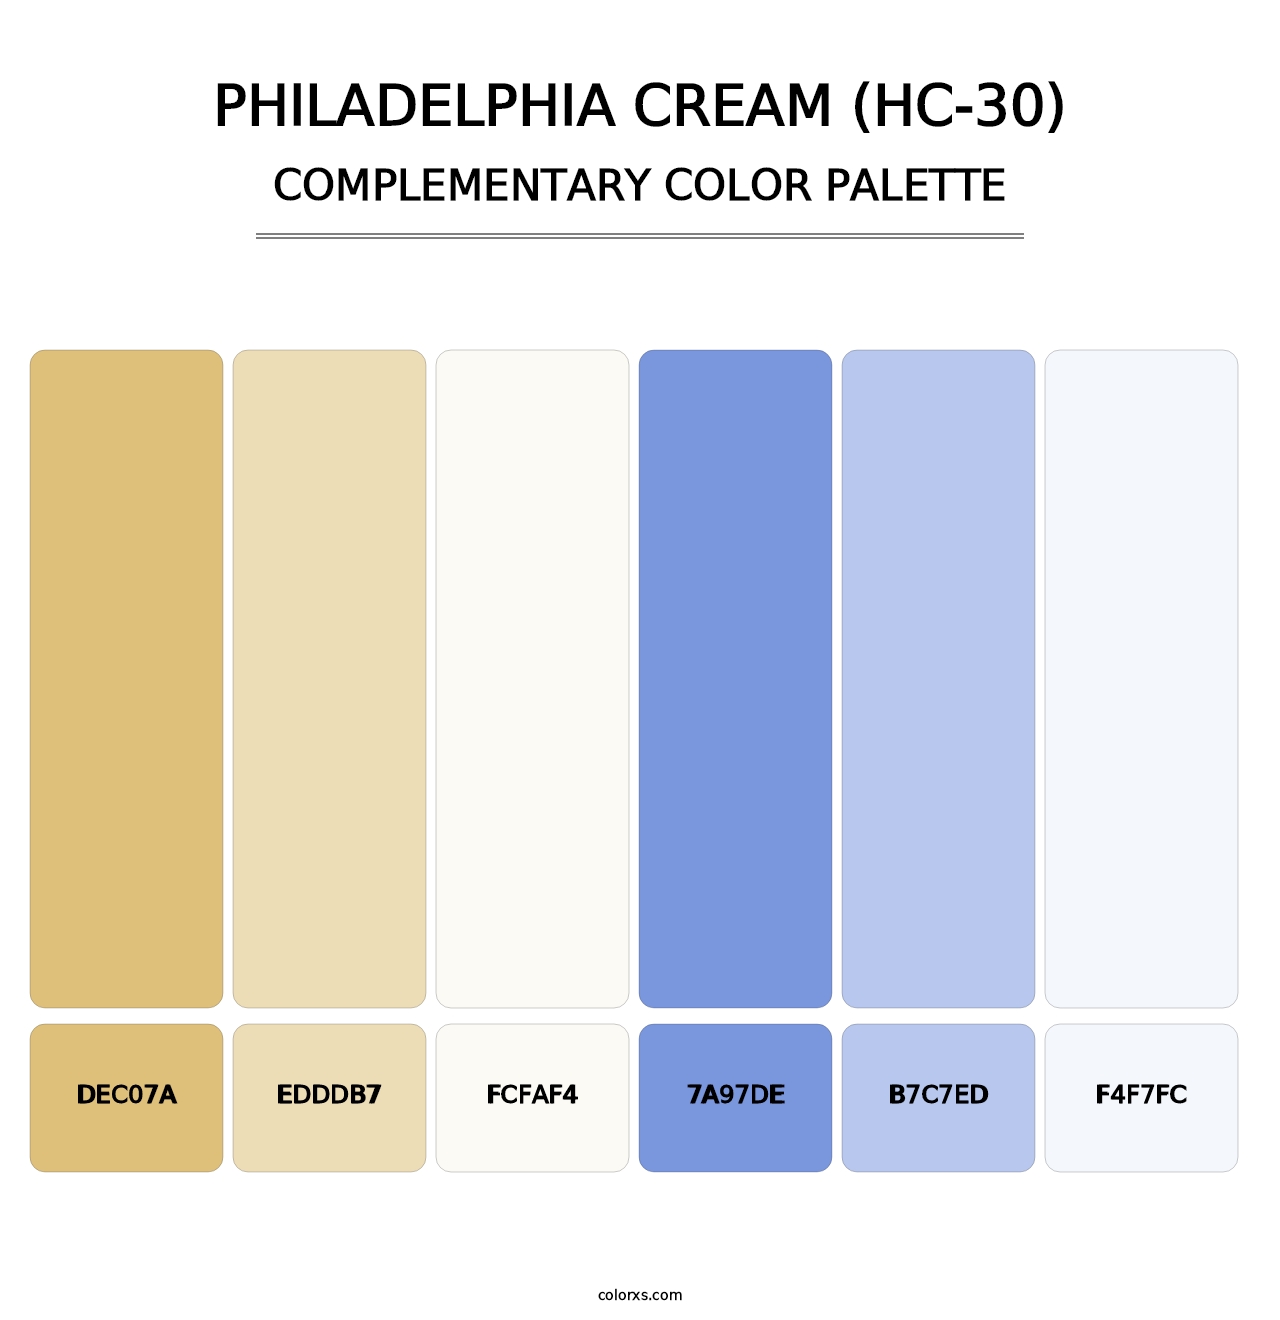 Philadelphia Cream (HC-30) - Complementary Color Palette